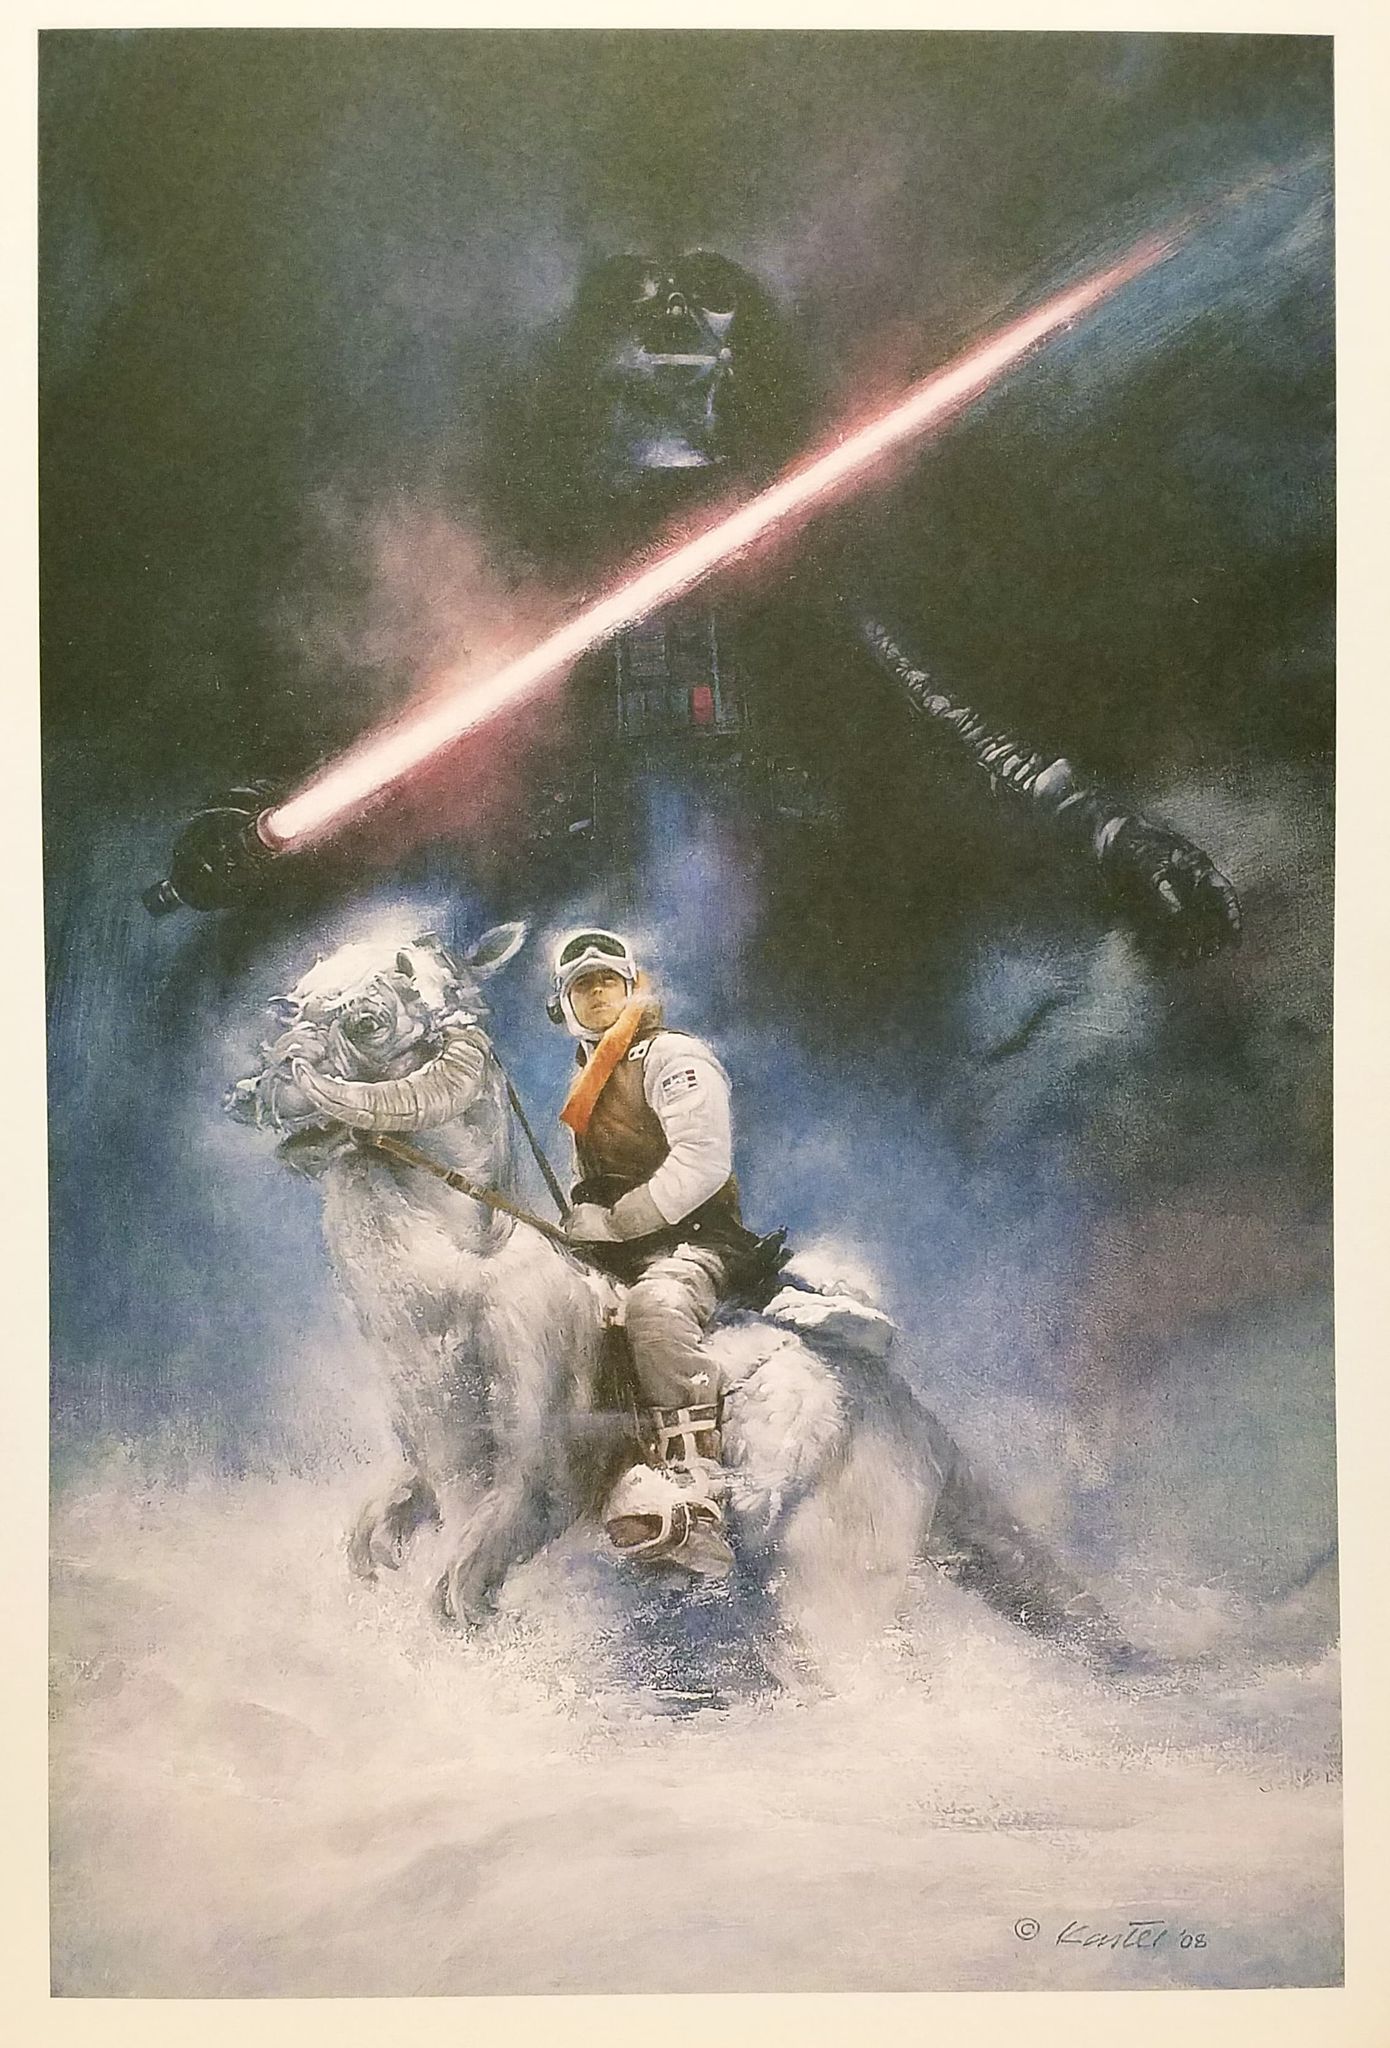 Star Wars Empire Strikes Back 11x16 Movie Art Poster Print by Roger Ka –  GrantsComics